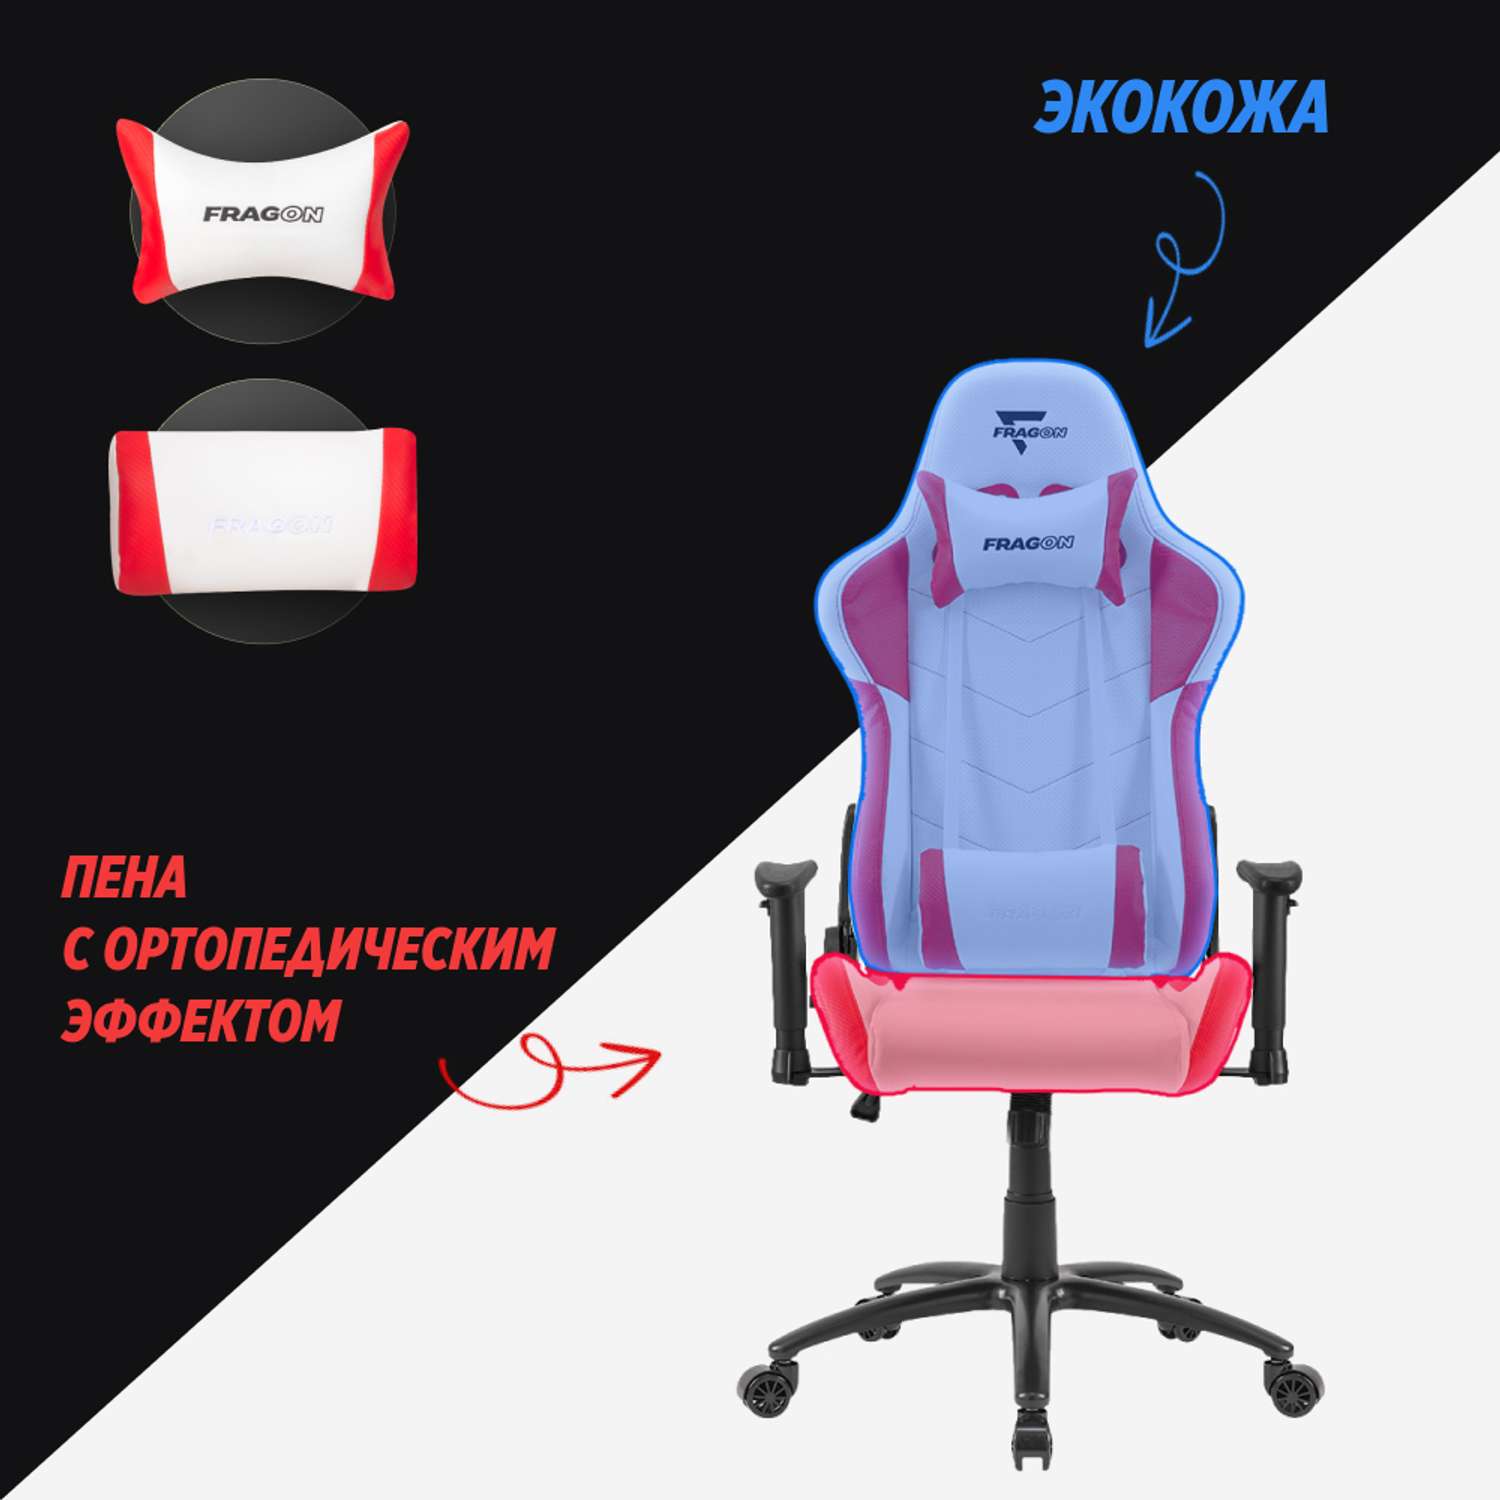 Компьютерное кресло GLHF серия 2X White/Red - фото 4